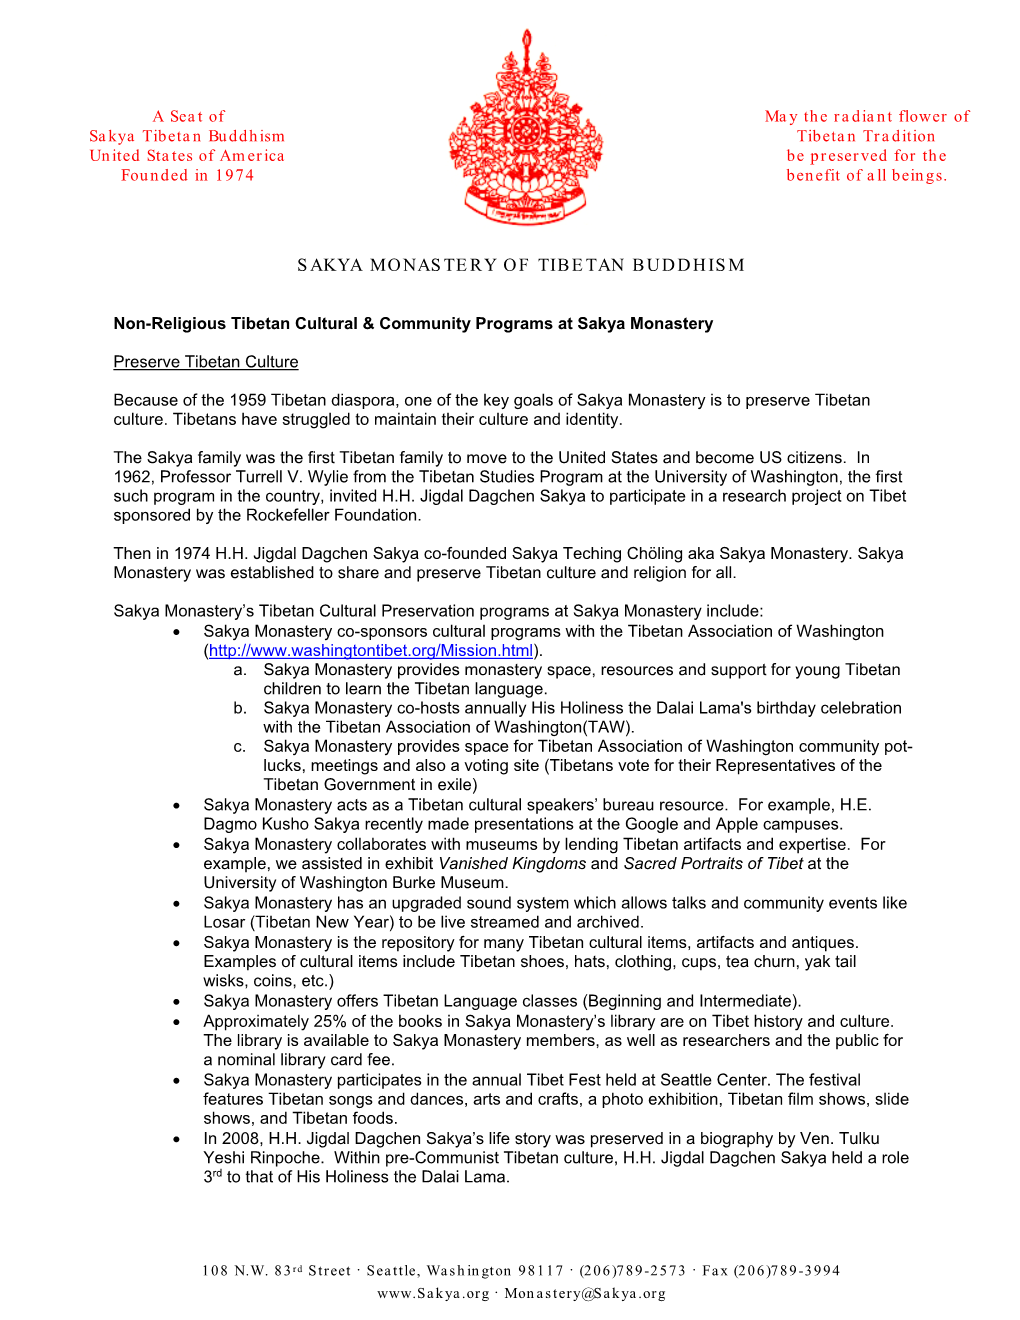 Cultural Programs with the Tibetan Association of Washington (